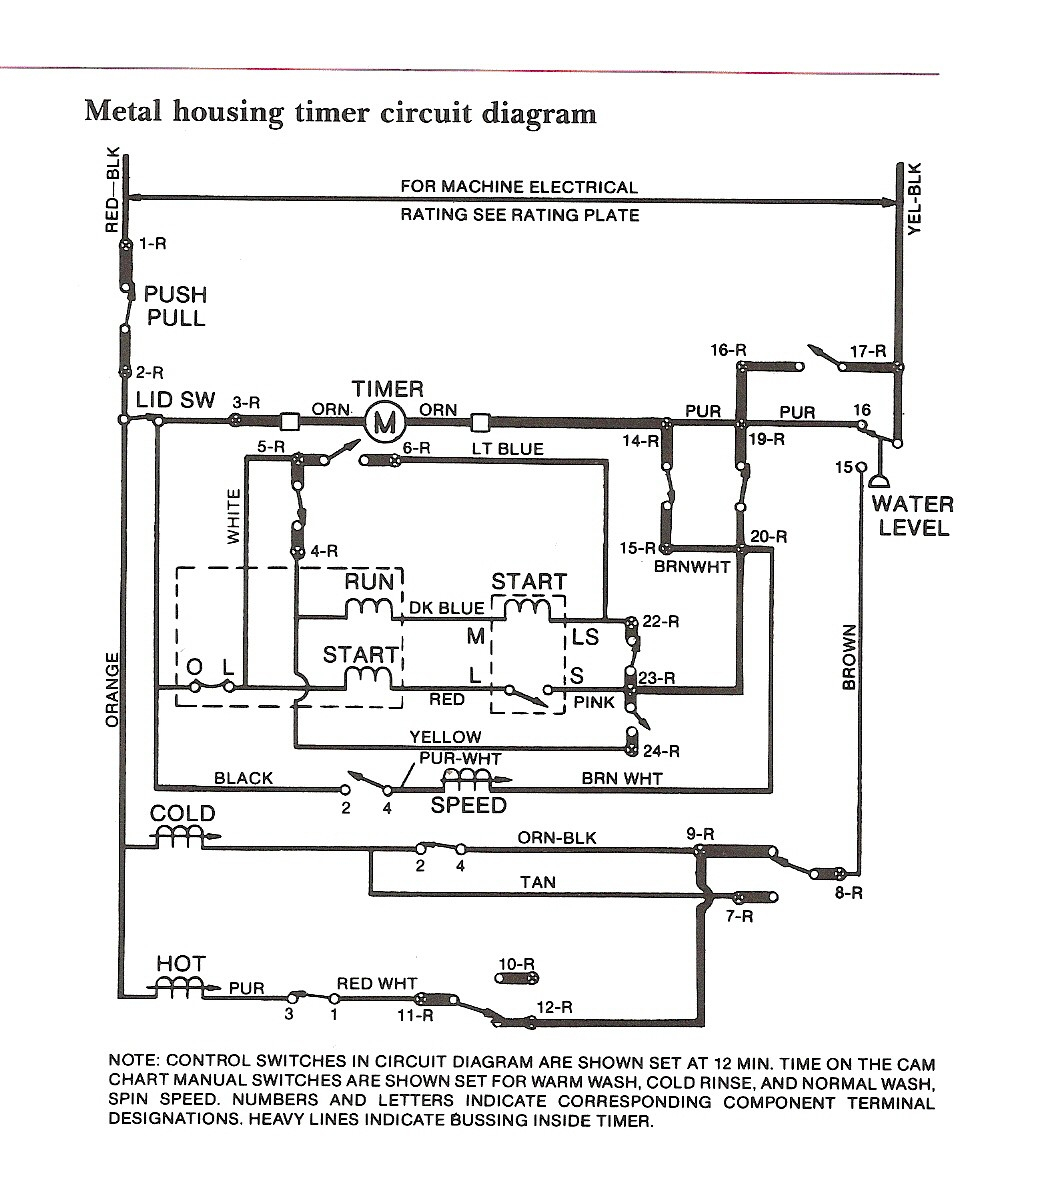 Ge Motor Wiring Diagram - Wiring Diagram Data Oreo - General Motors Wiring Diagram